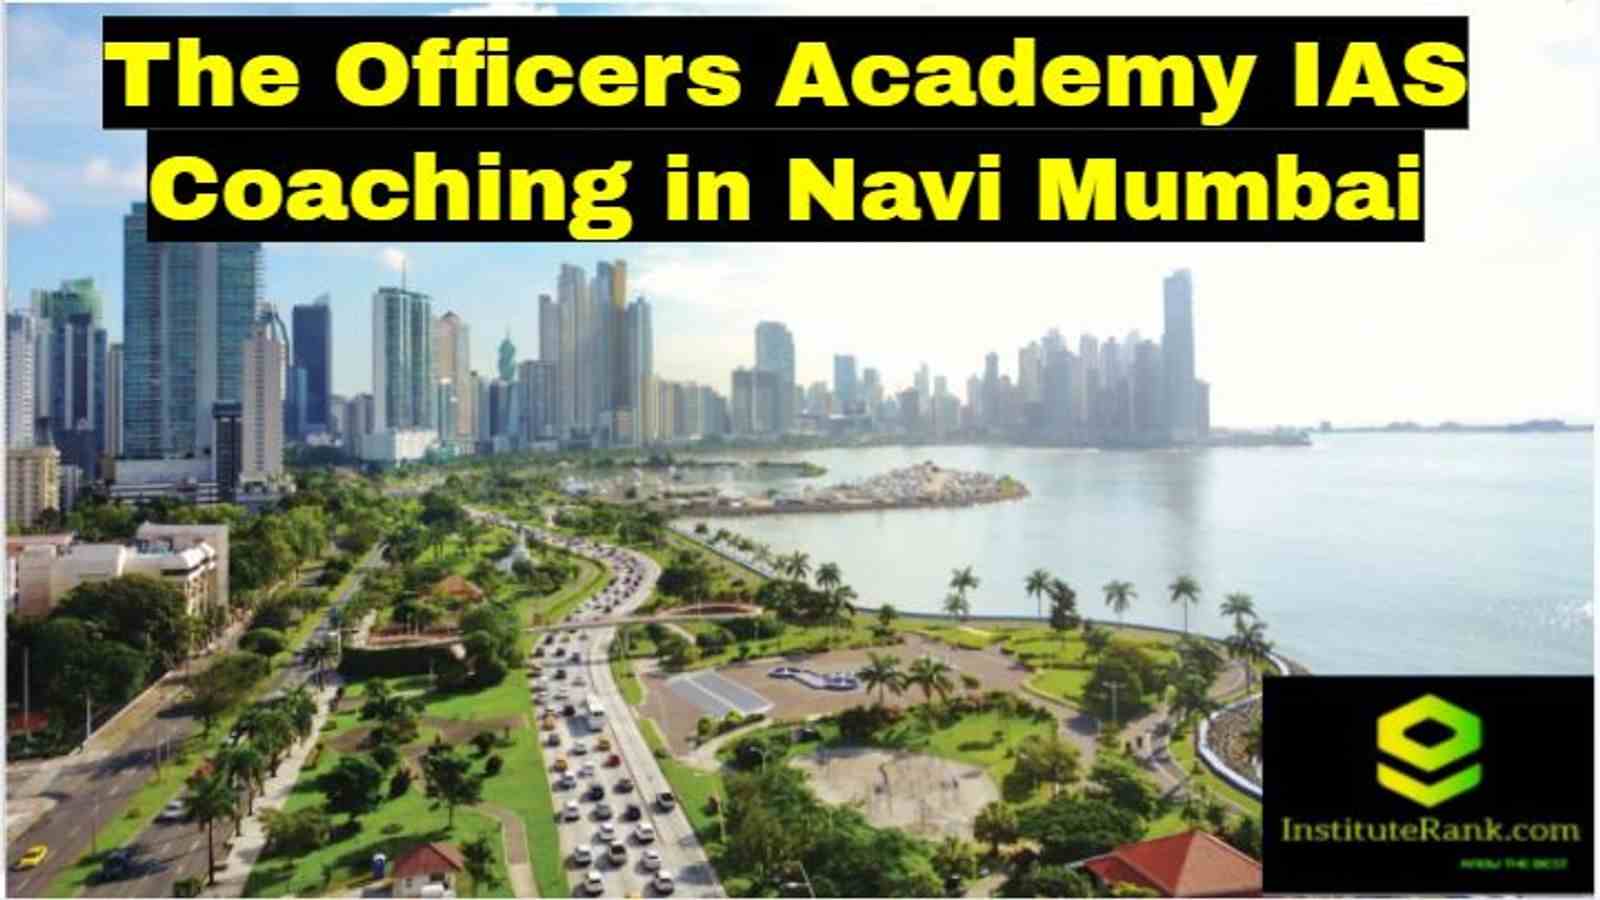 The Officers Academy IAS Coaching in Navi Mumbai